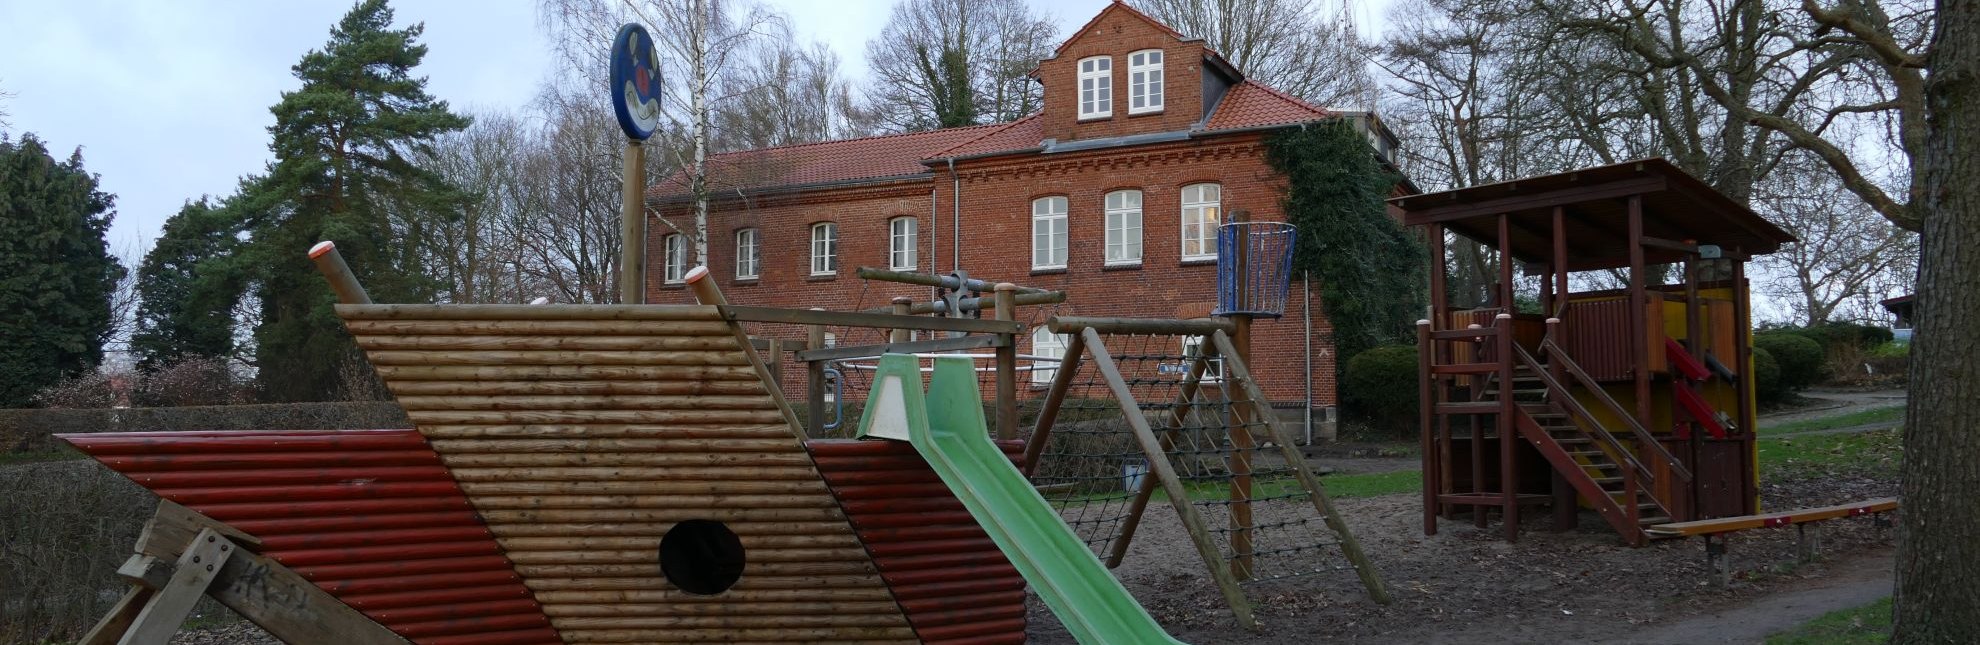 Kinderspielplatz am Schloss, © Ulrike Sindermann